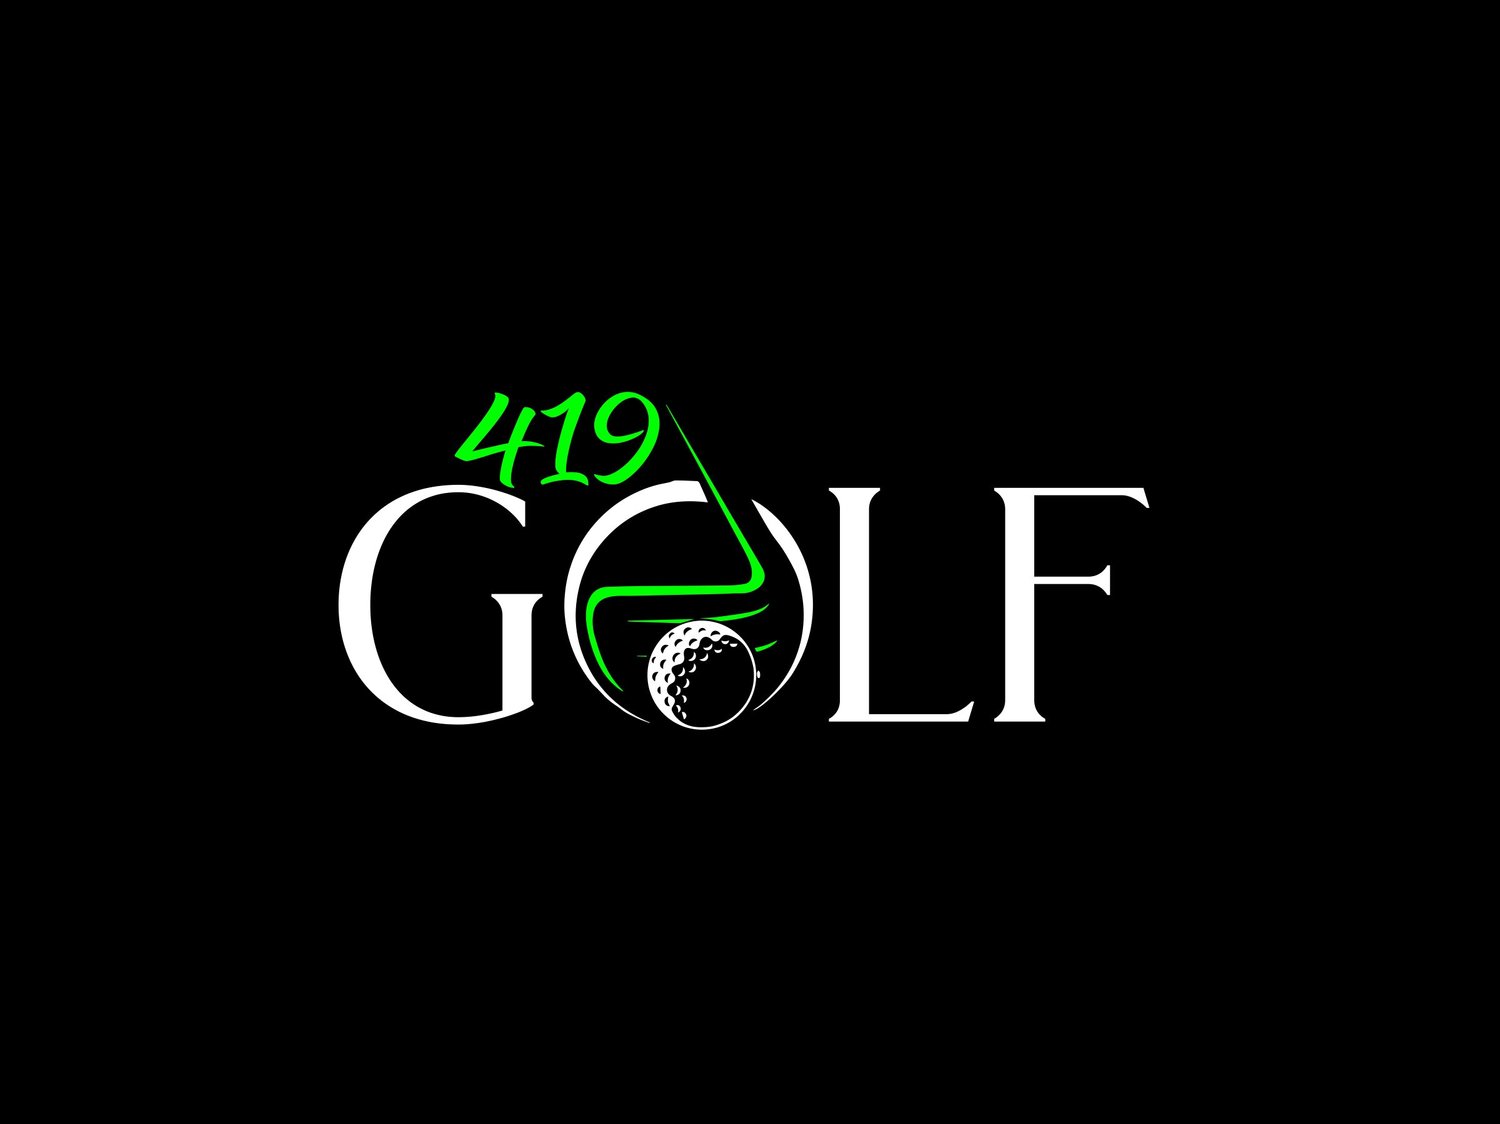 419 Golf